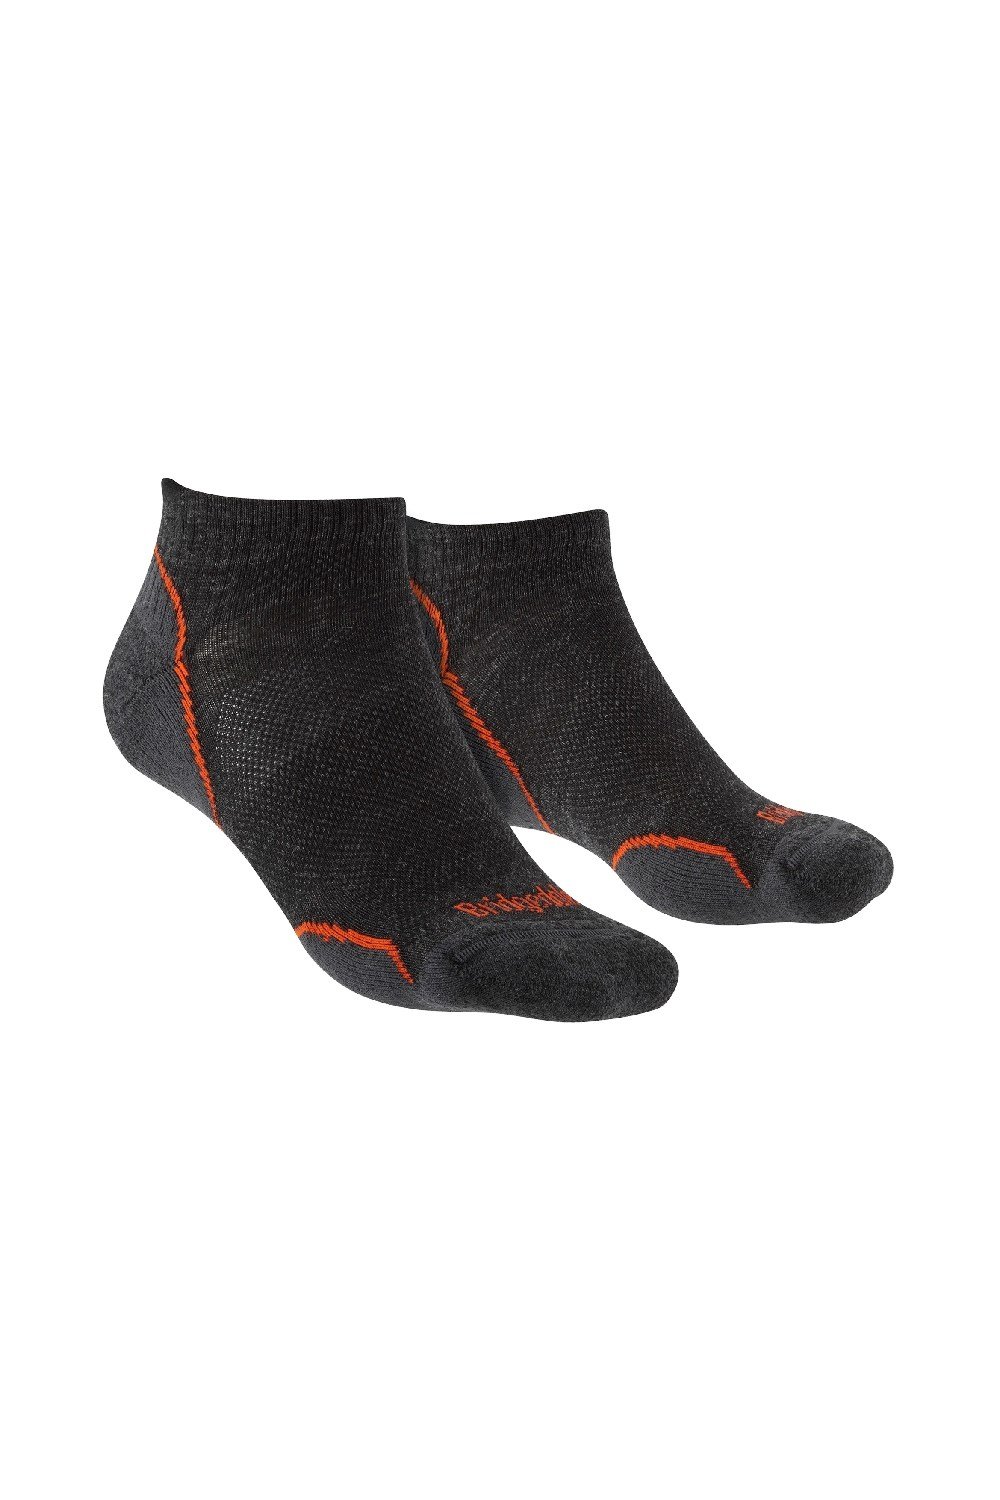 Mens Hiking Ultralight T2 Merino Socks -